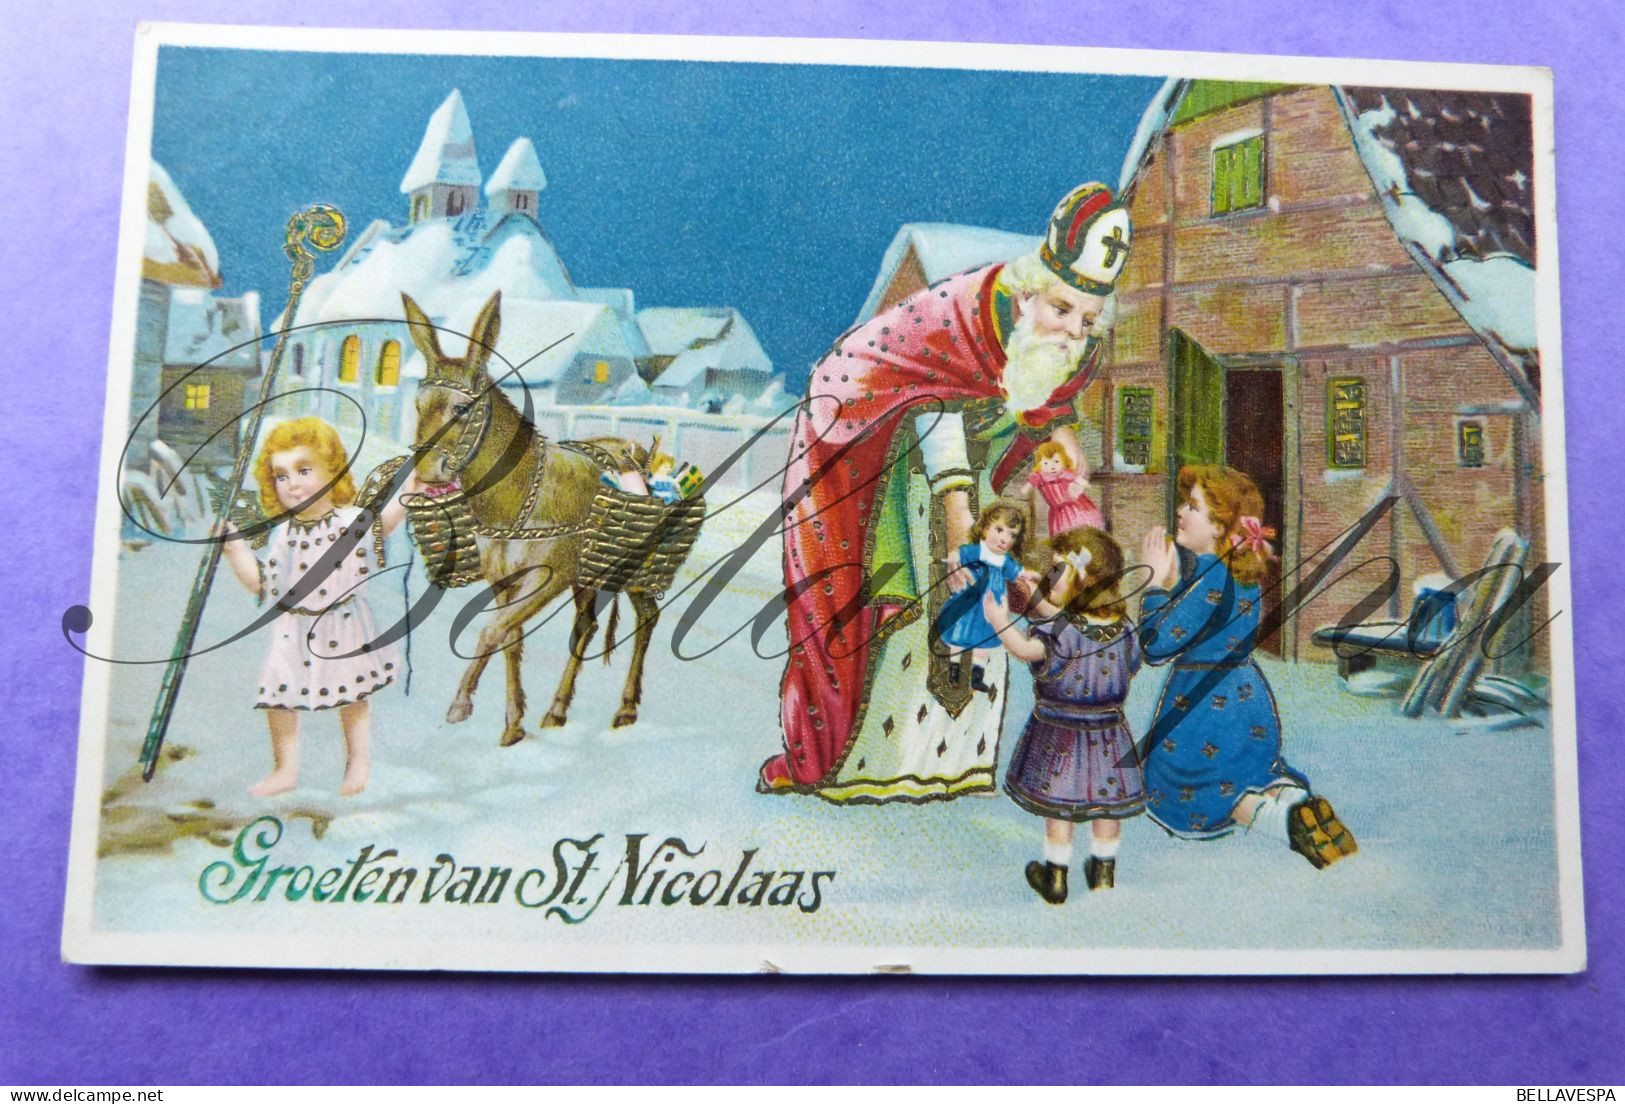 Fantasie Groeten St Nicolas Sint Nicolaas Sint Niklaas Sinterklaas Druk S.B. Gerany 3118 H - Nikolaus